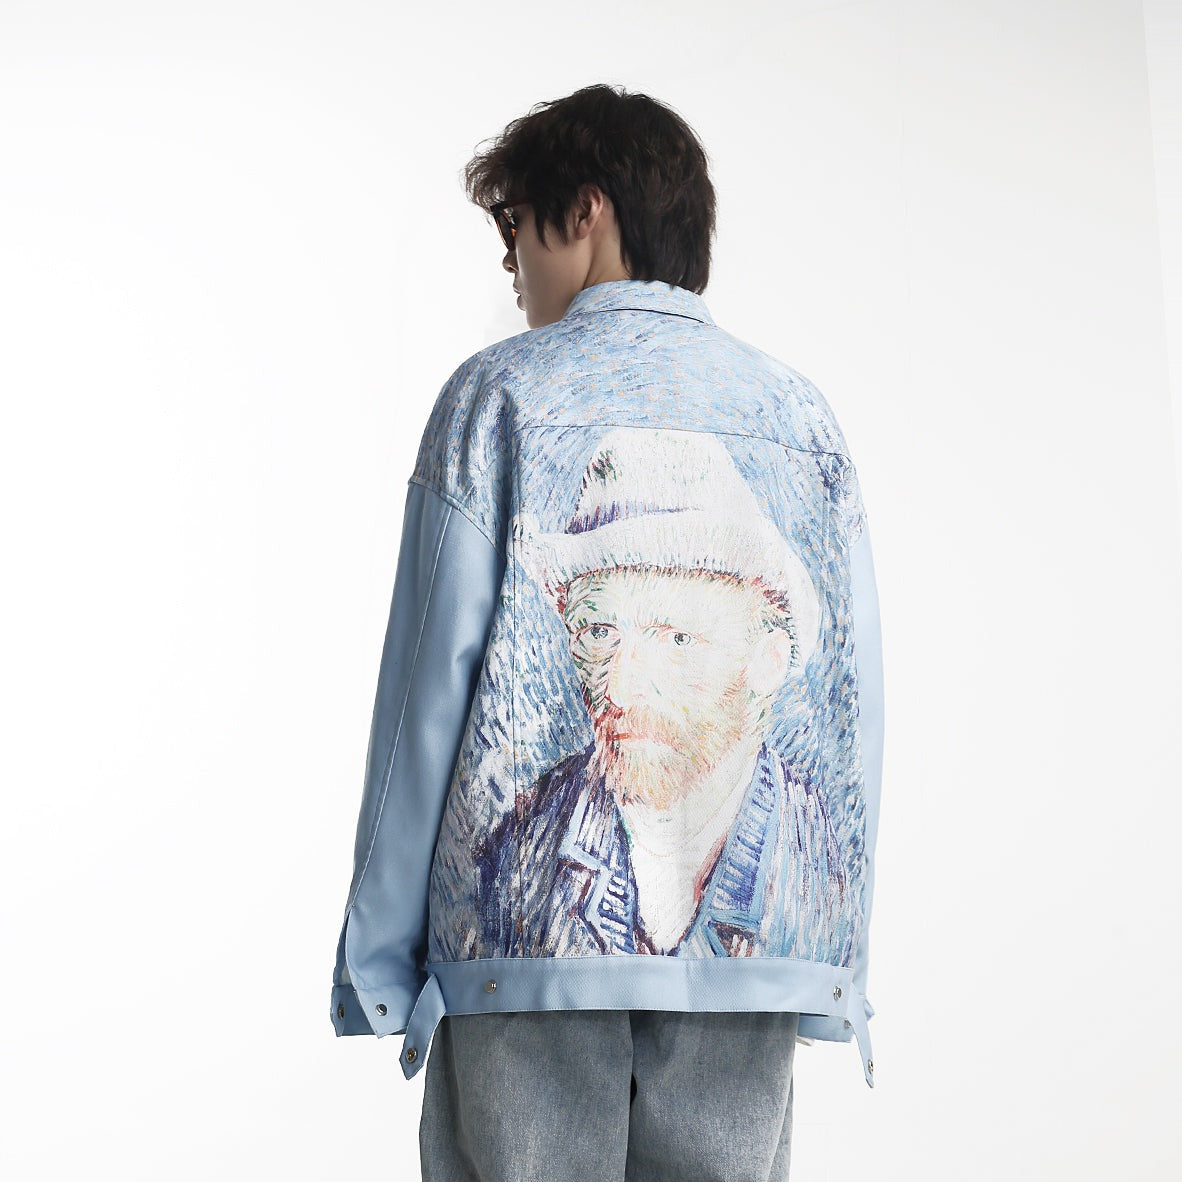 Van Gogh Portrait Inspired Jacket